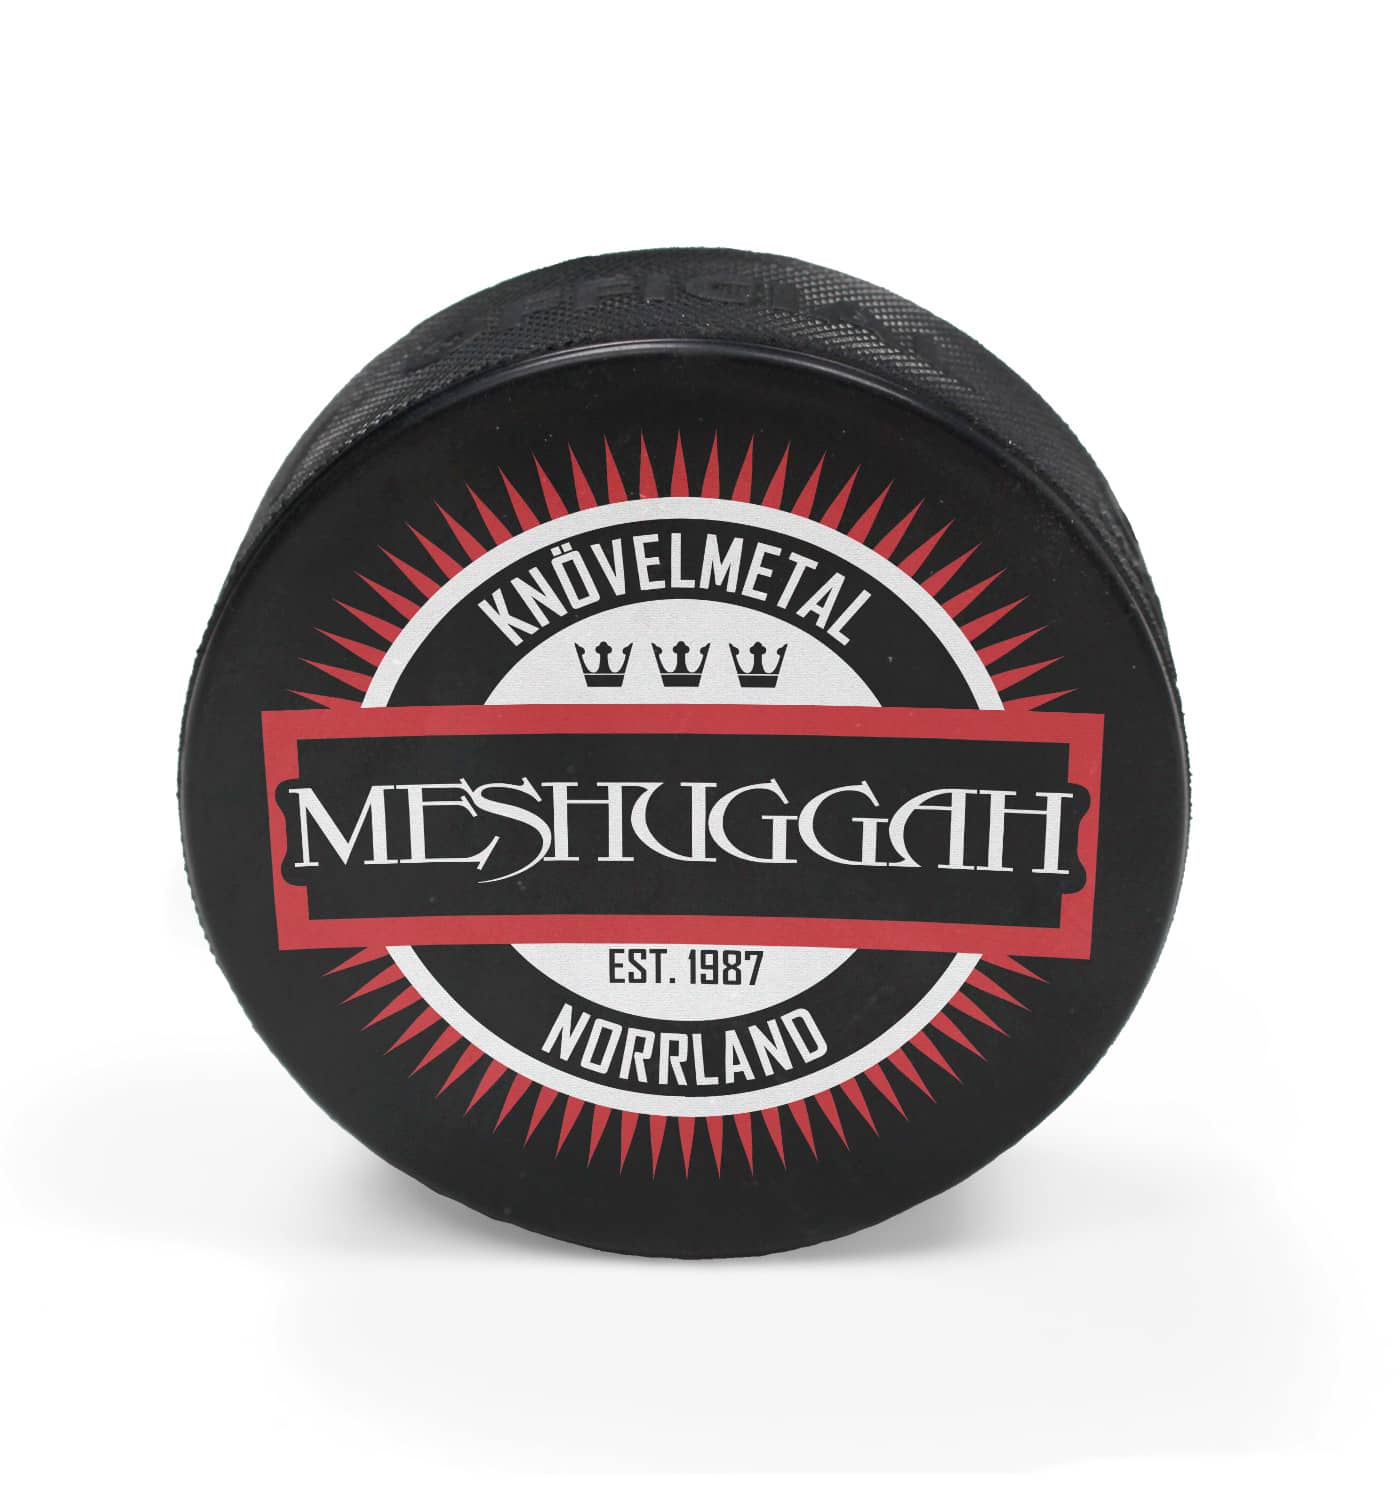 MESHUGGAH 'KNÖVELMETAL' limited edition hockey puck